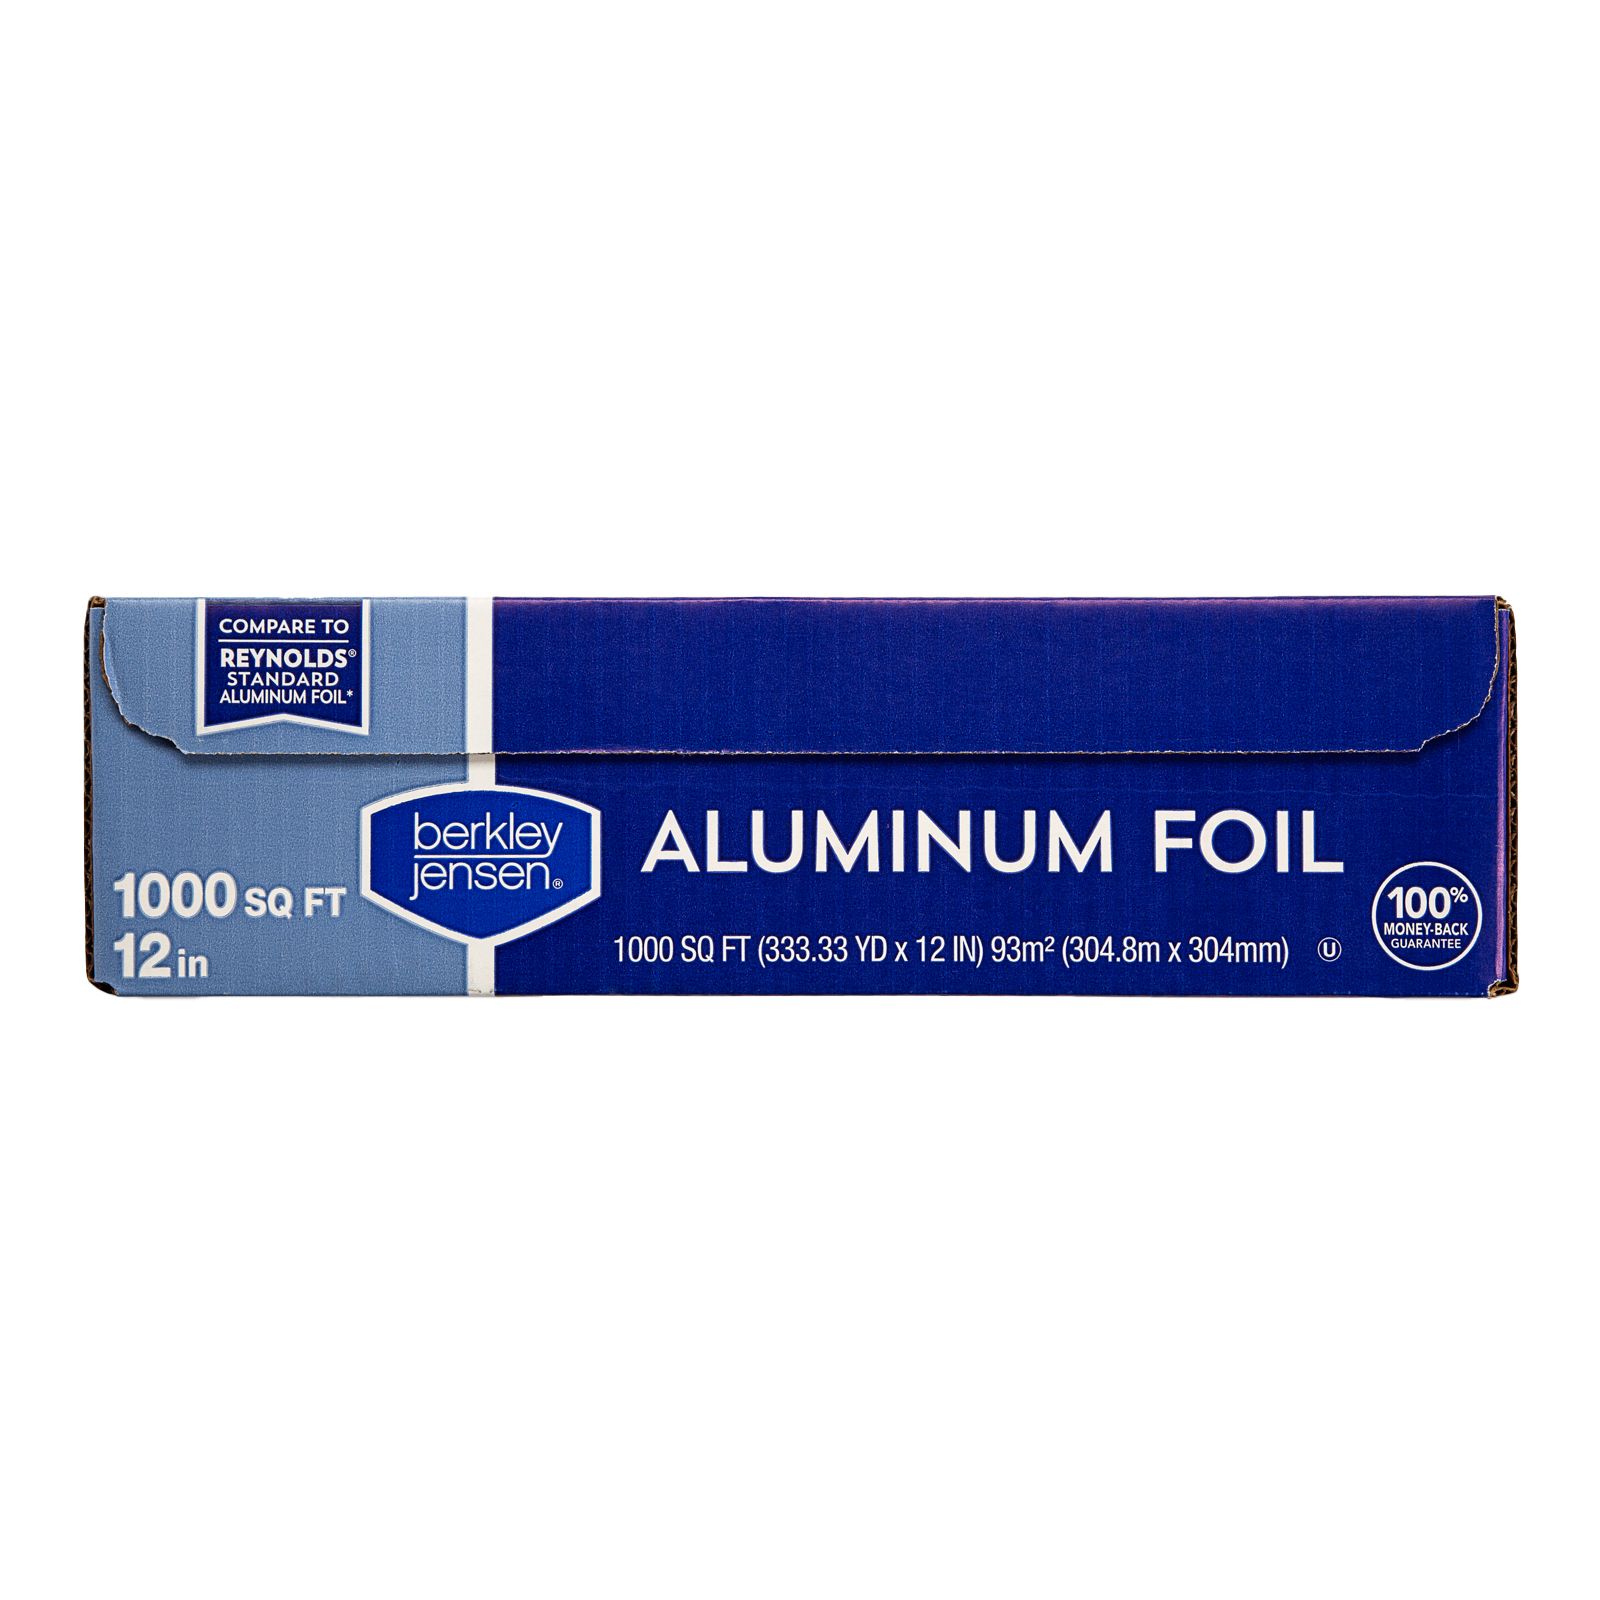 Save on Reynolds Wrap Aluminum Foil 12 Inch Wide - 2 ct Order Online  Delivery